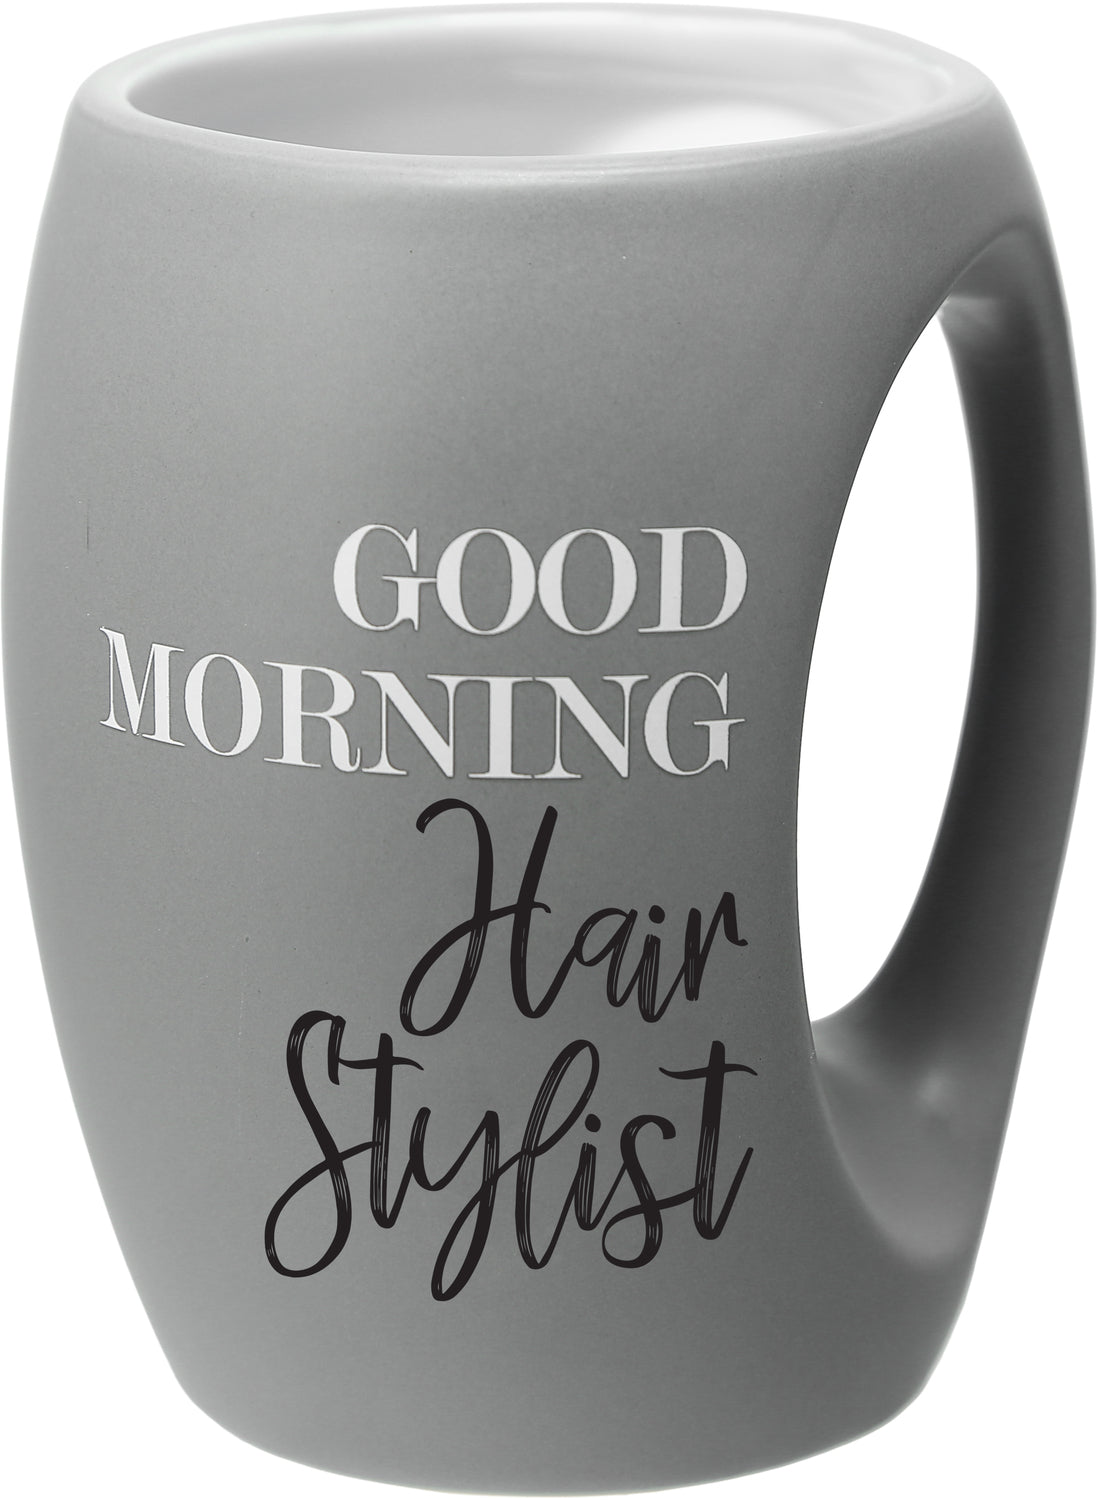 Good Morning Hair Stylist Mug